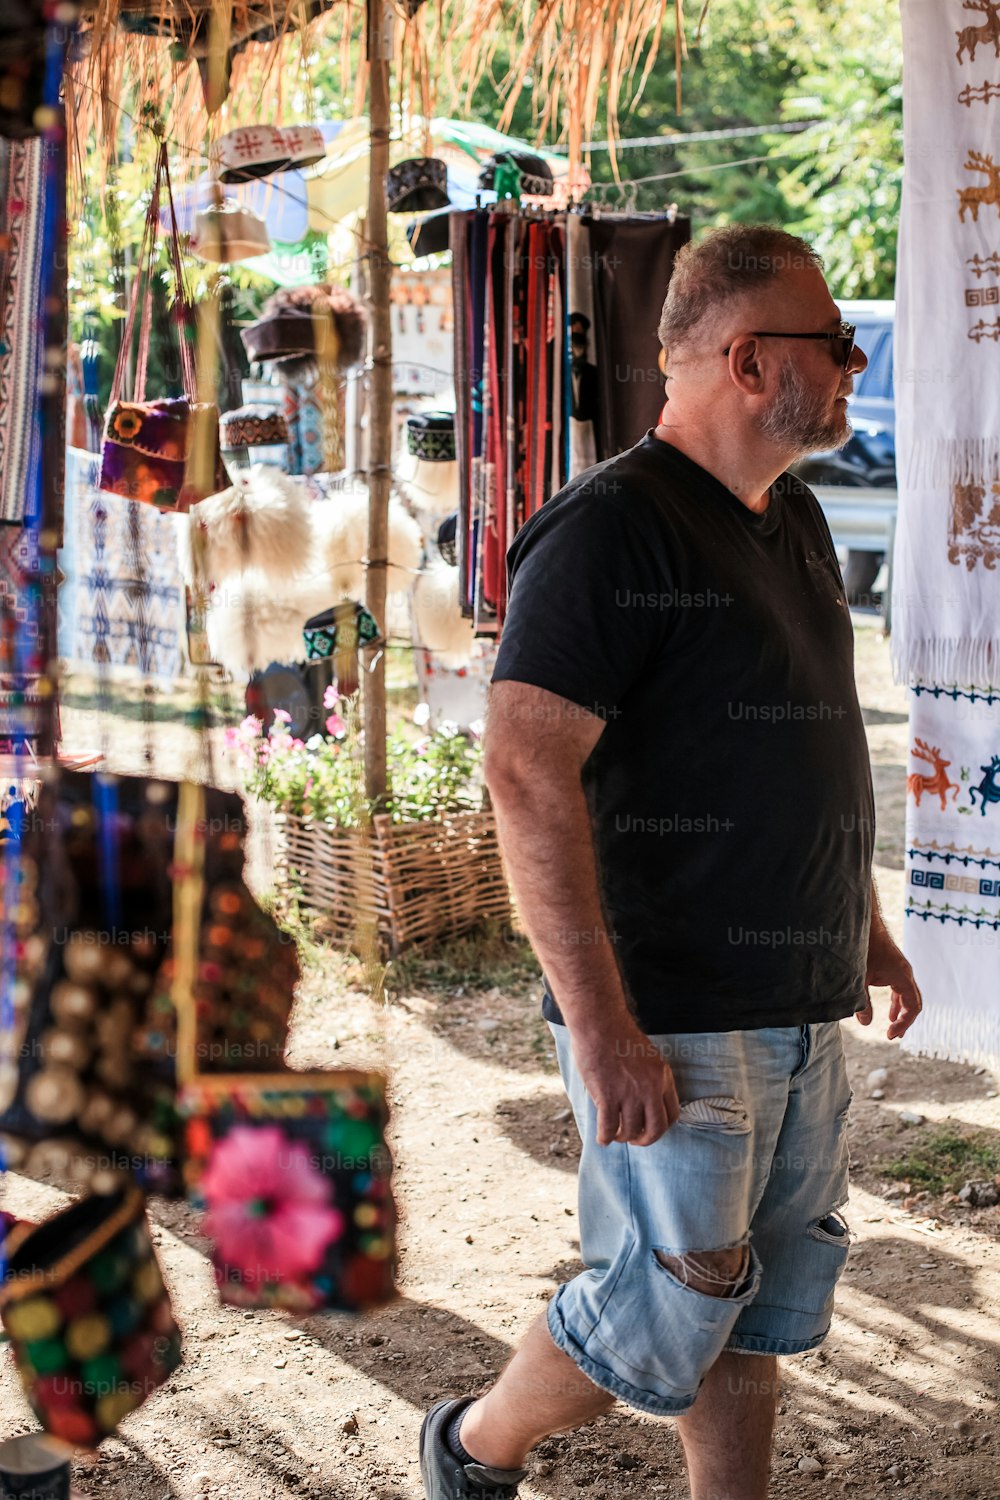 a man is walking through a market area